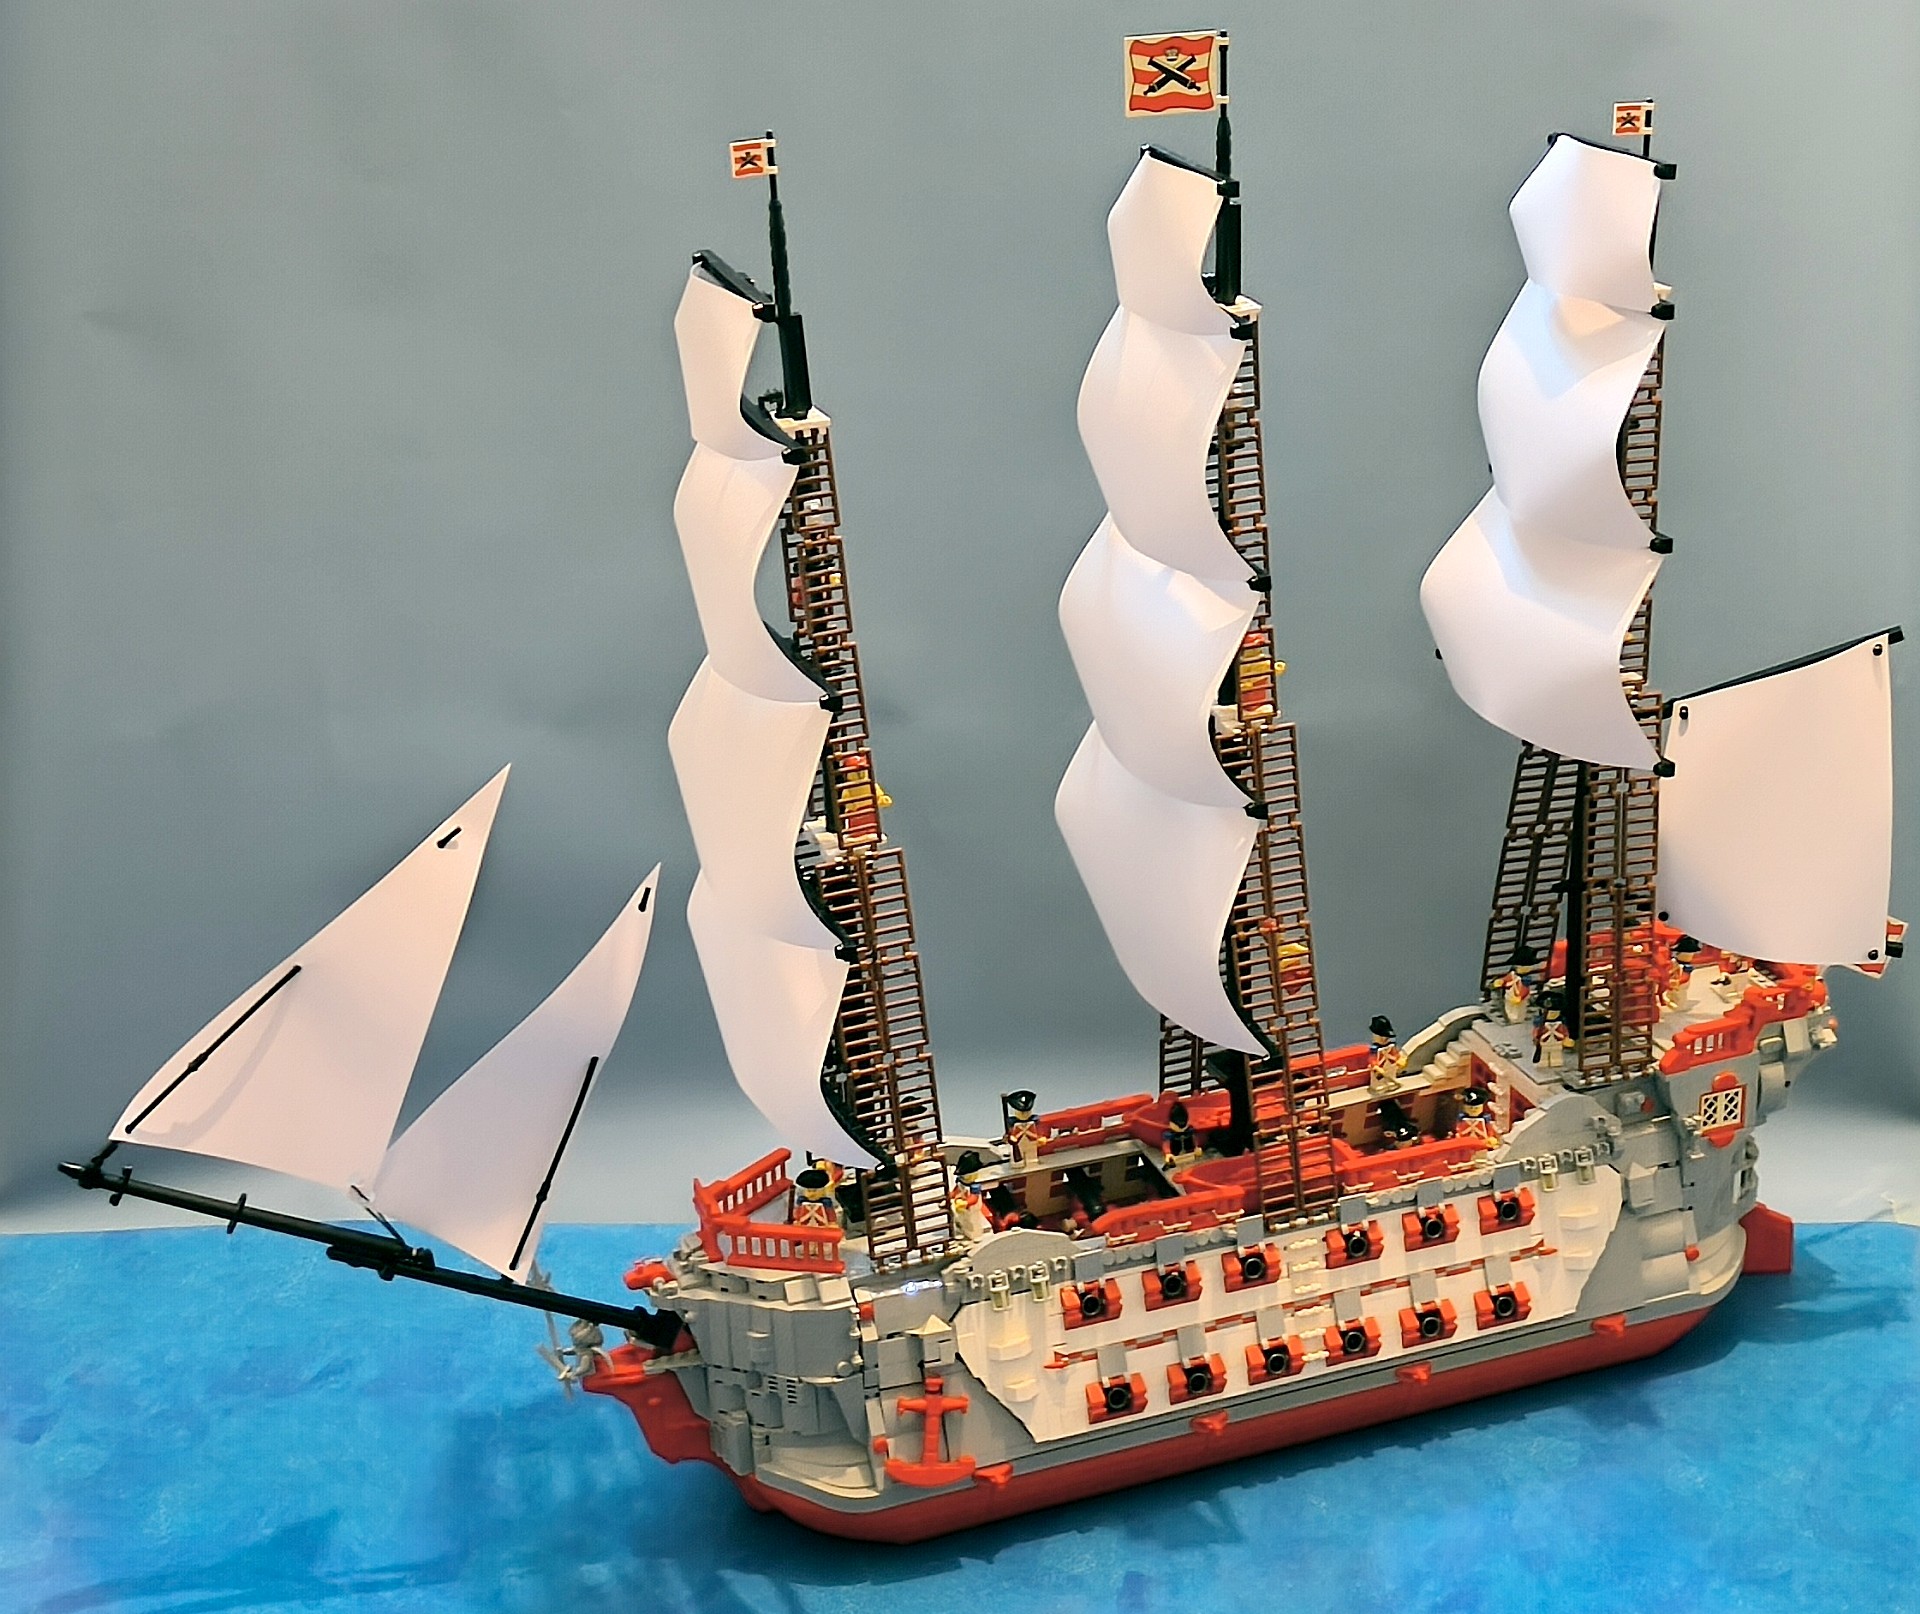 MOC] The Eliminator, my new ship! - Pirate MOCs - Eurobricks Forums